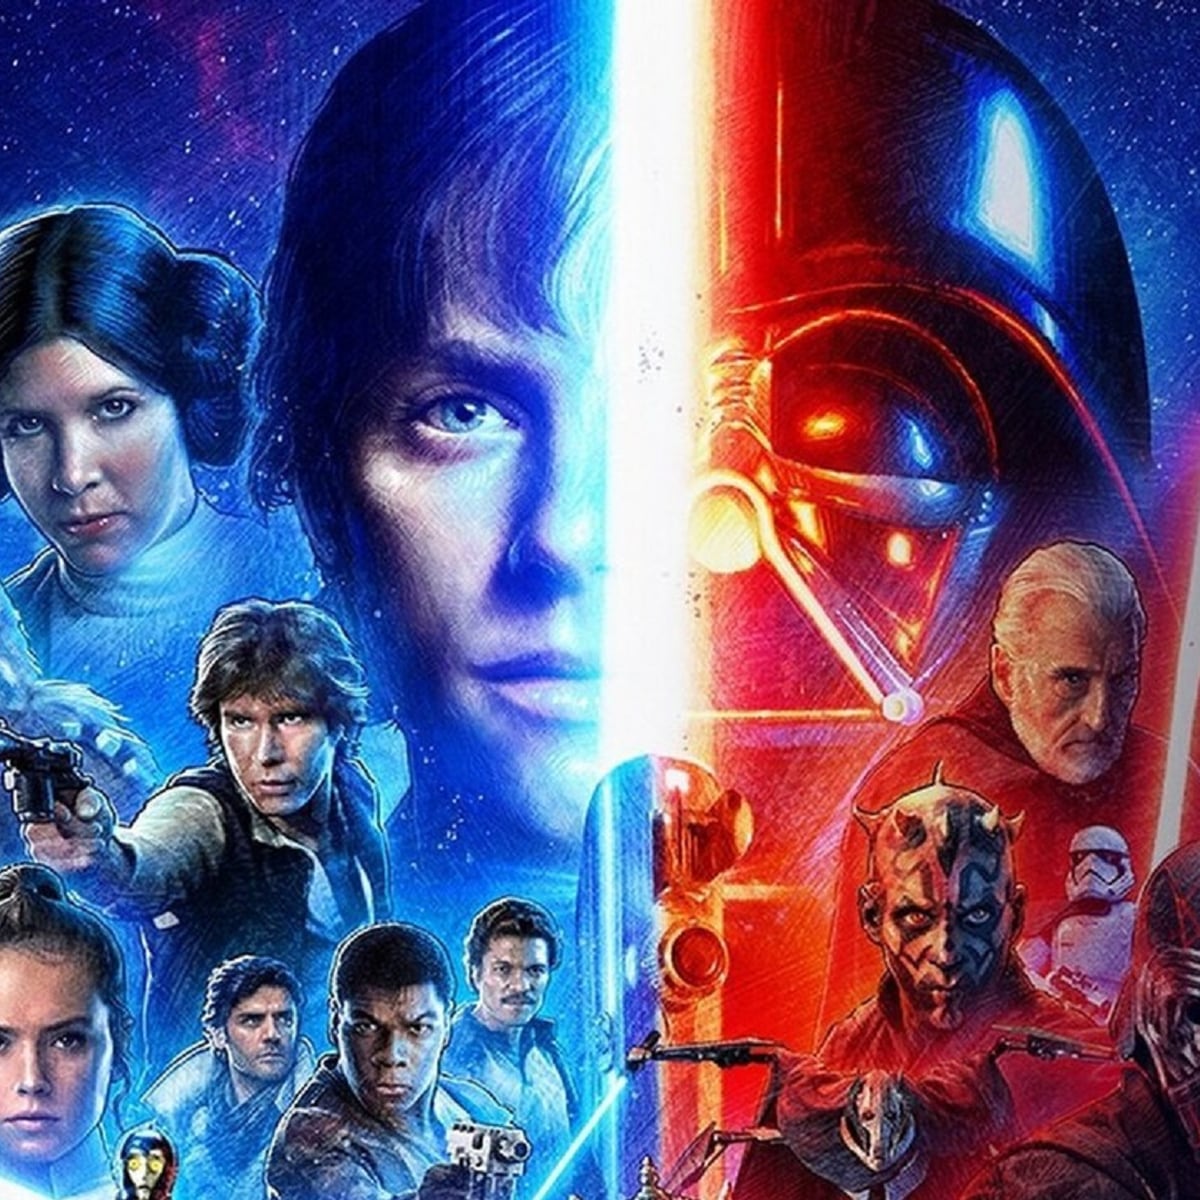 How to watch every Star Wars movie on Star Wars Day - CBS News